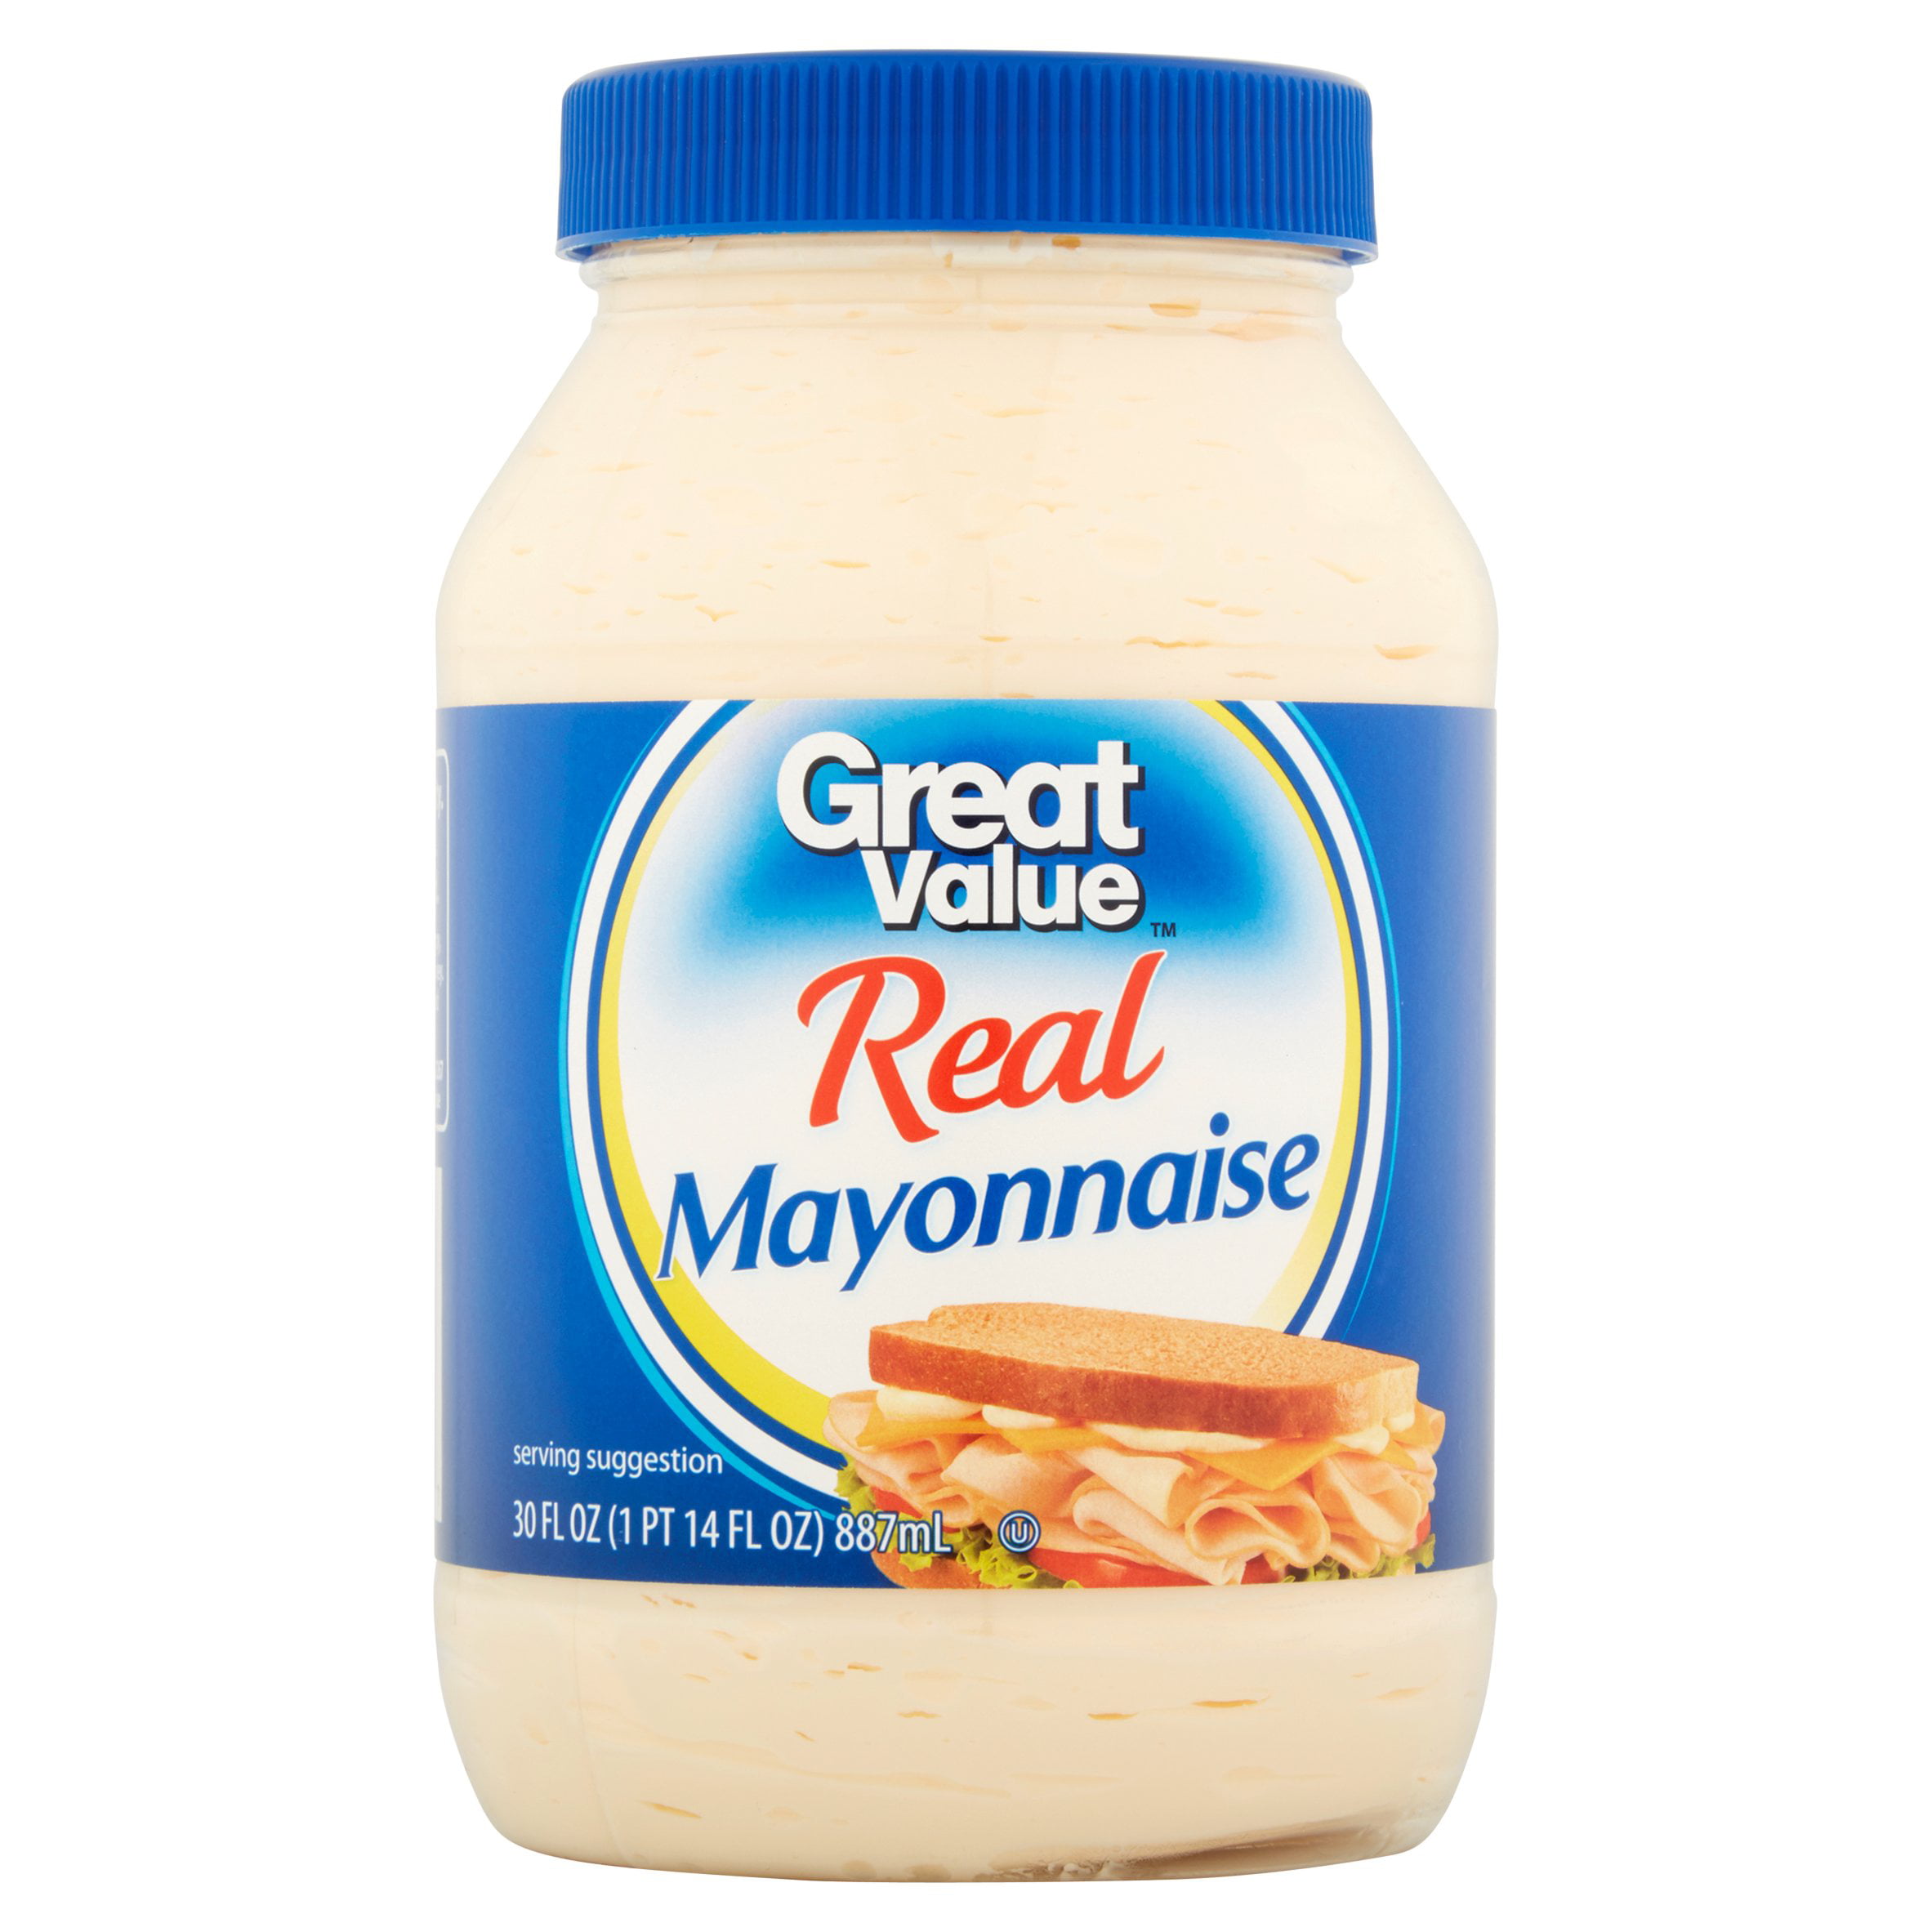 Great Value Real Mayonnaise, 30 fl oz - Walmart.com - Walmart.com